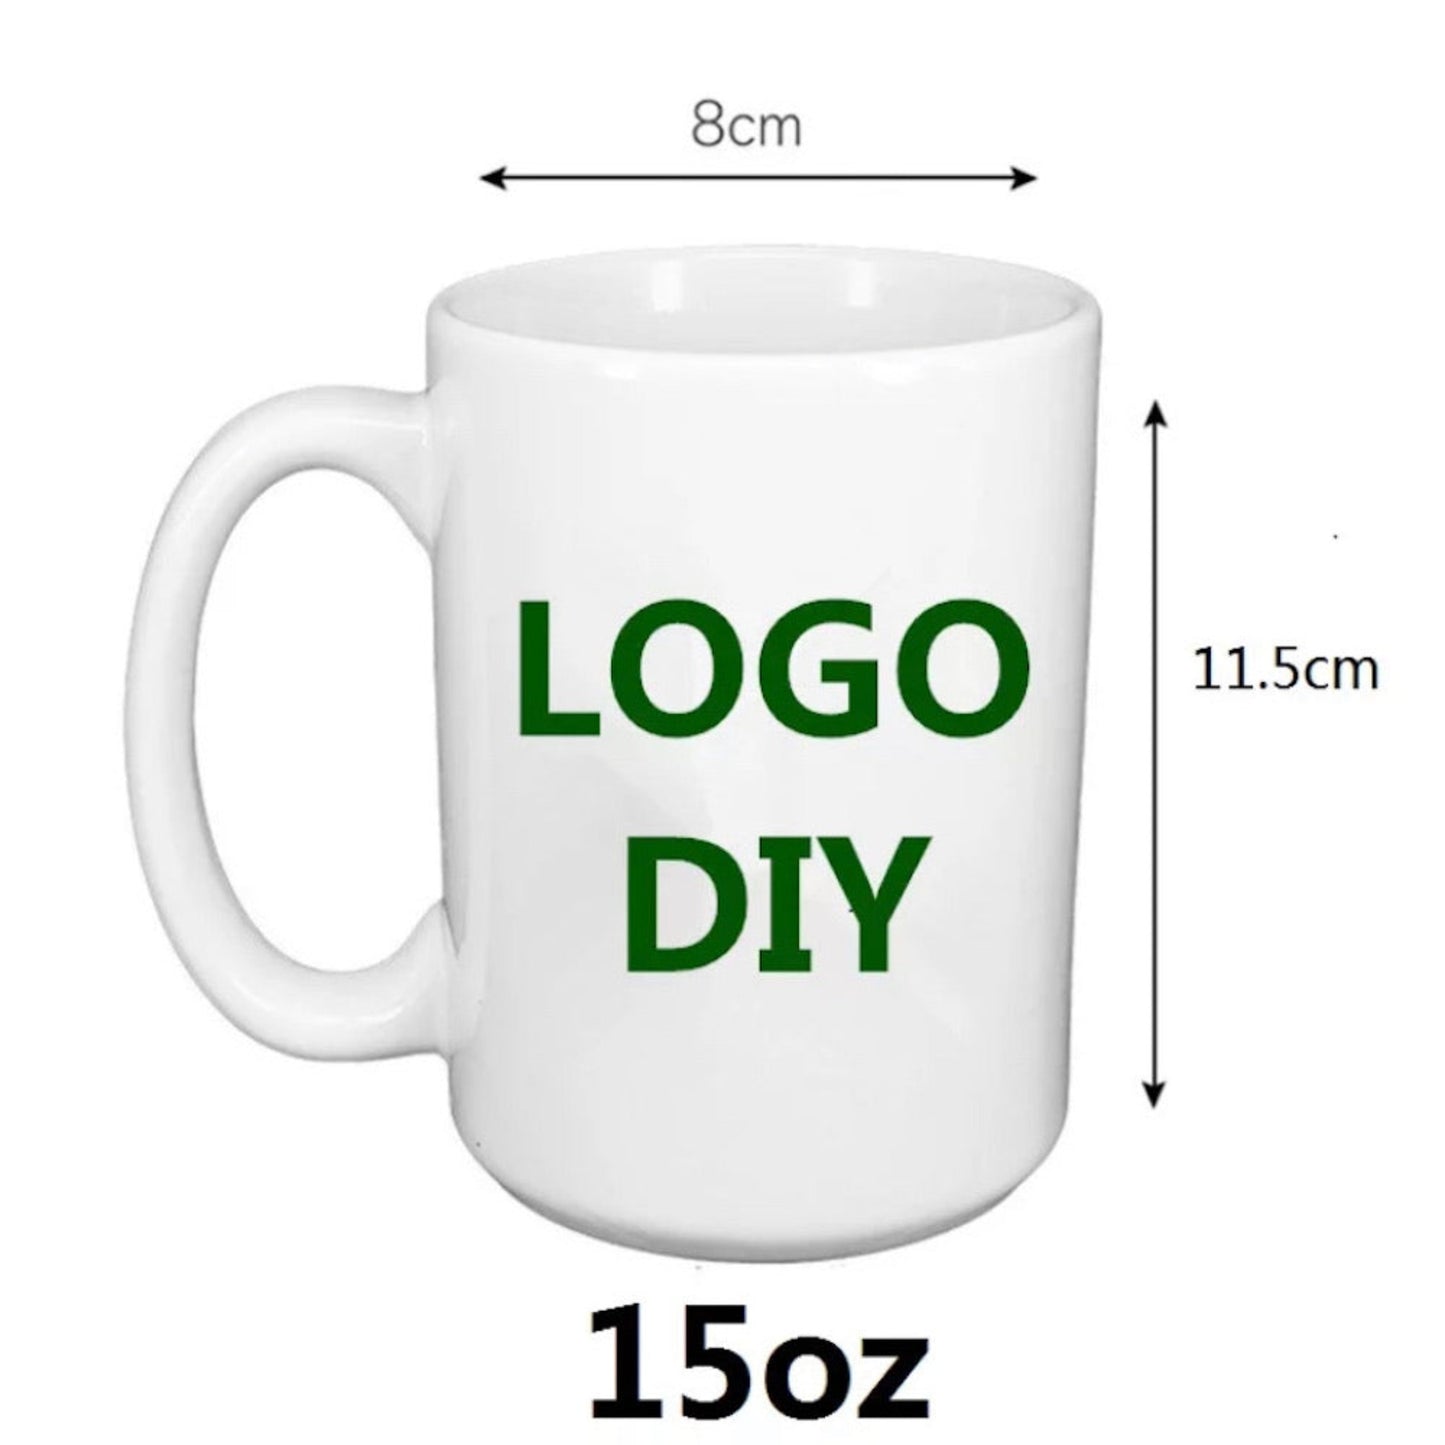 15 oz Ceramic Mug Personalized customizable White Microwave safe Dishwasher safe hot drinks cold drinks